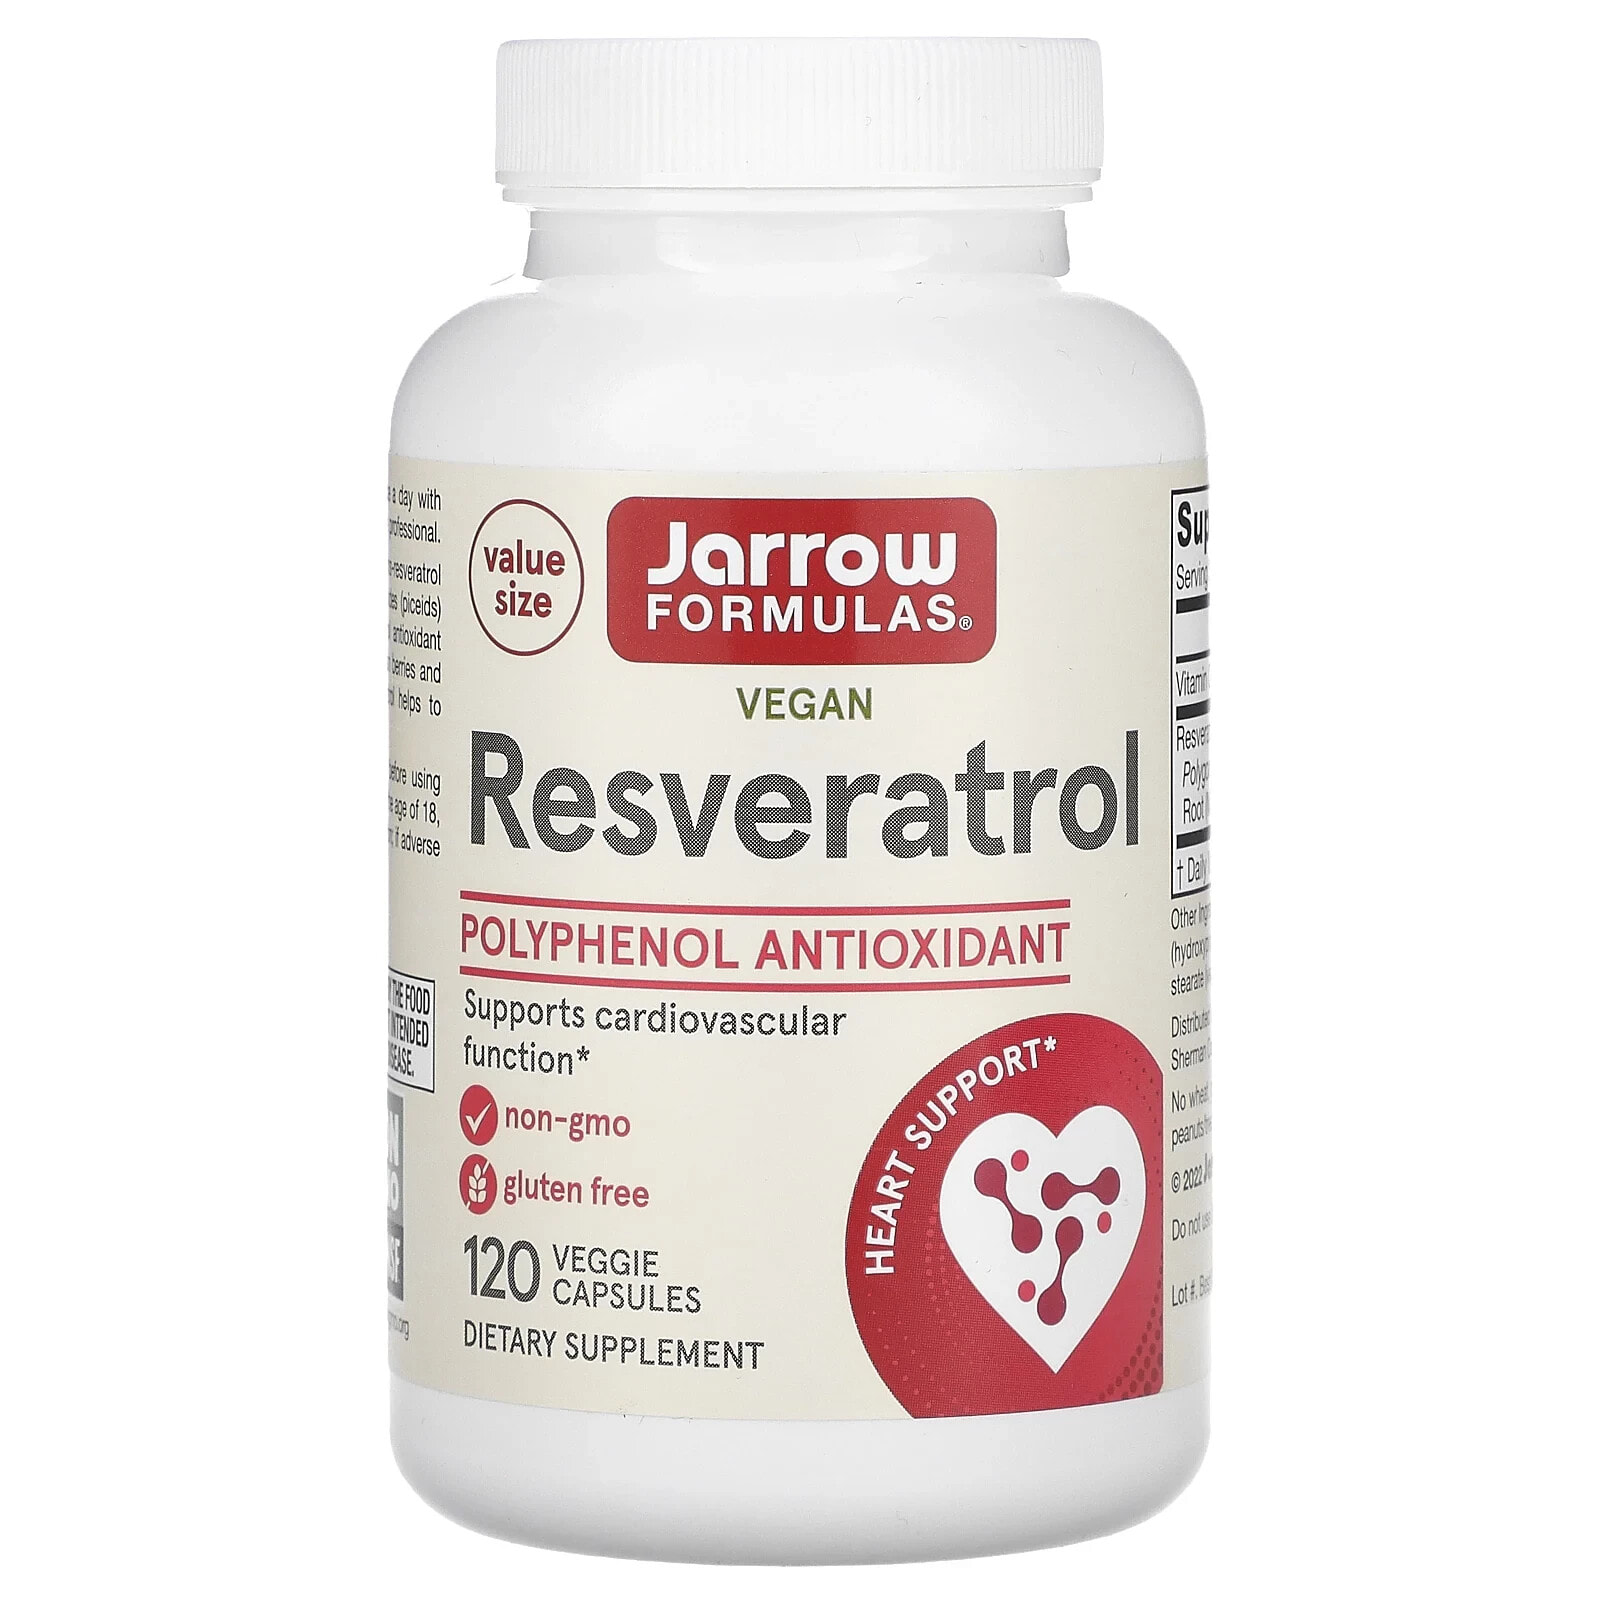 Jarrow Formulas, ресвератрол, 100 мг, 60 вегетарианских капсул